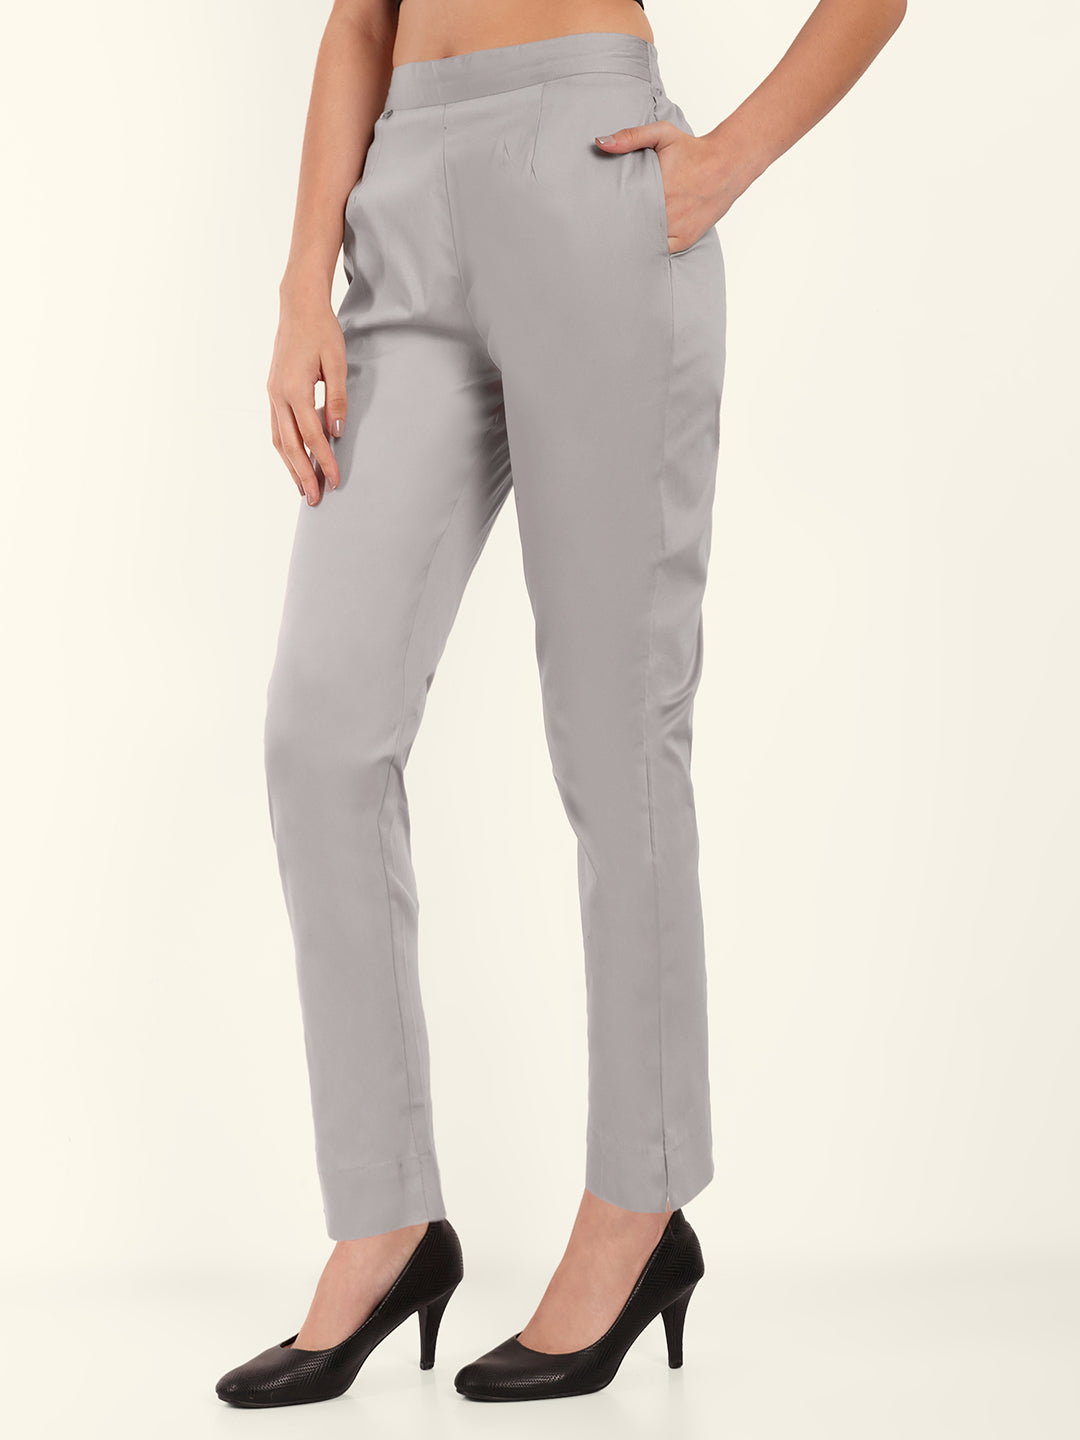 Naariy Light Grey Stretchable Cotton Pant